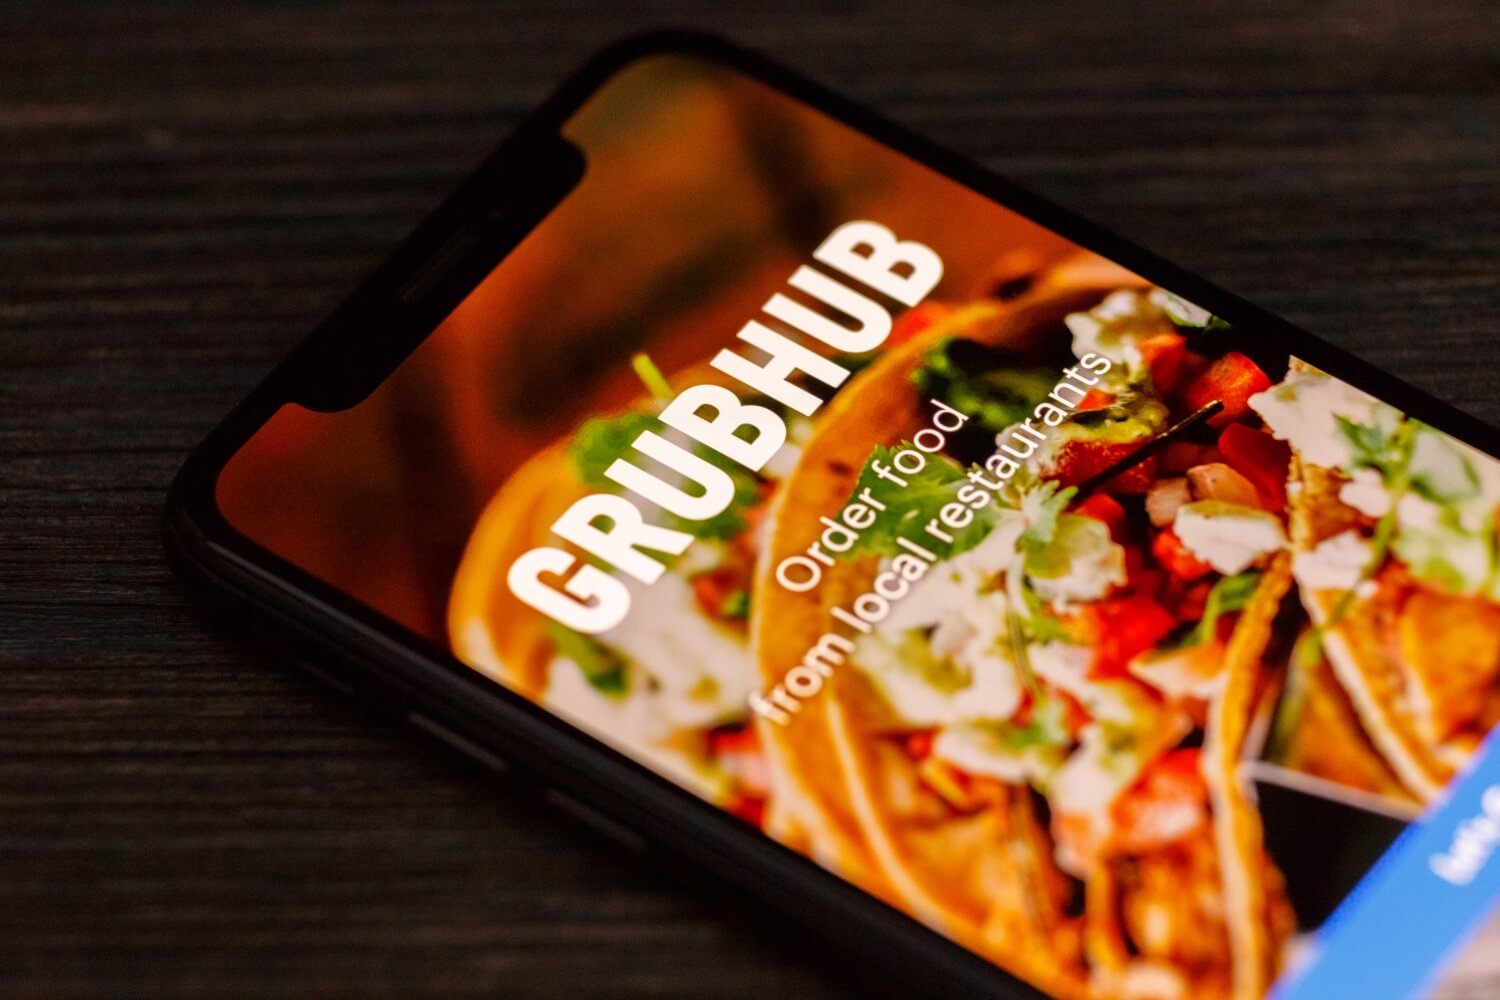 Just Eat Takeaway buys Grubhub for $7.3 billion to enter US market